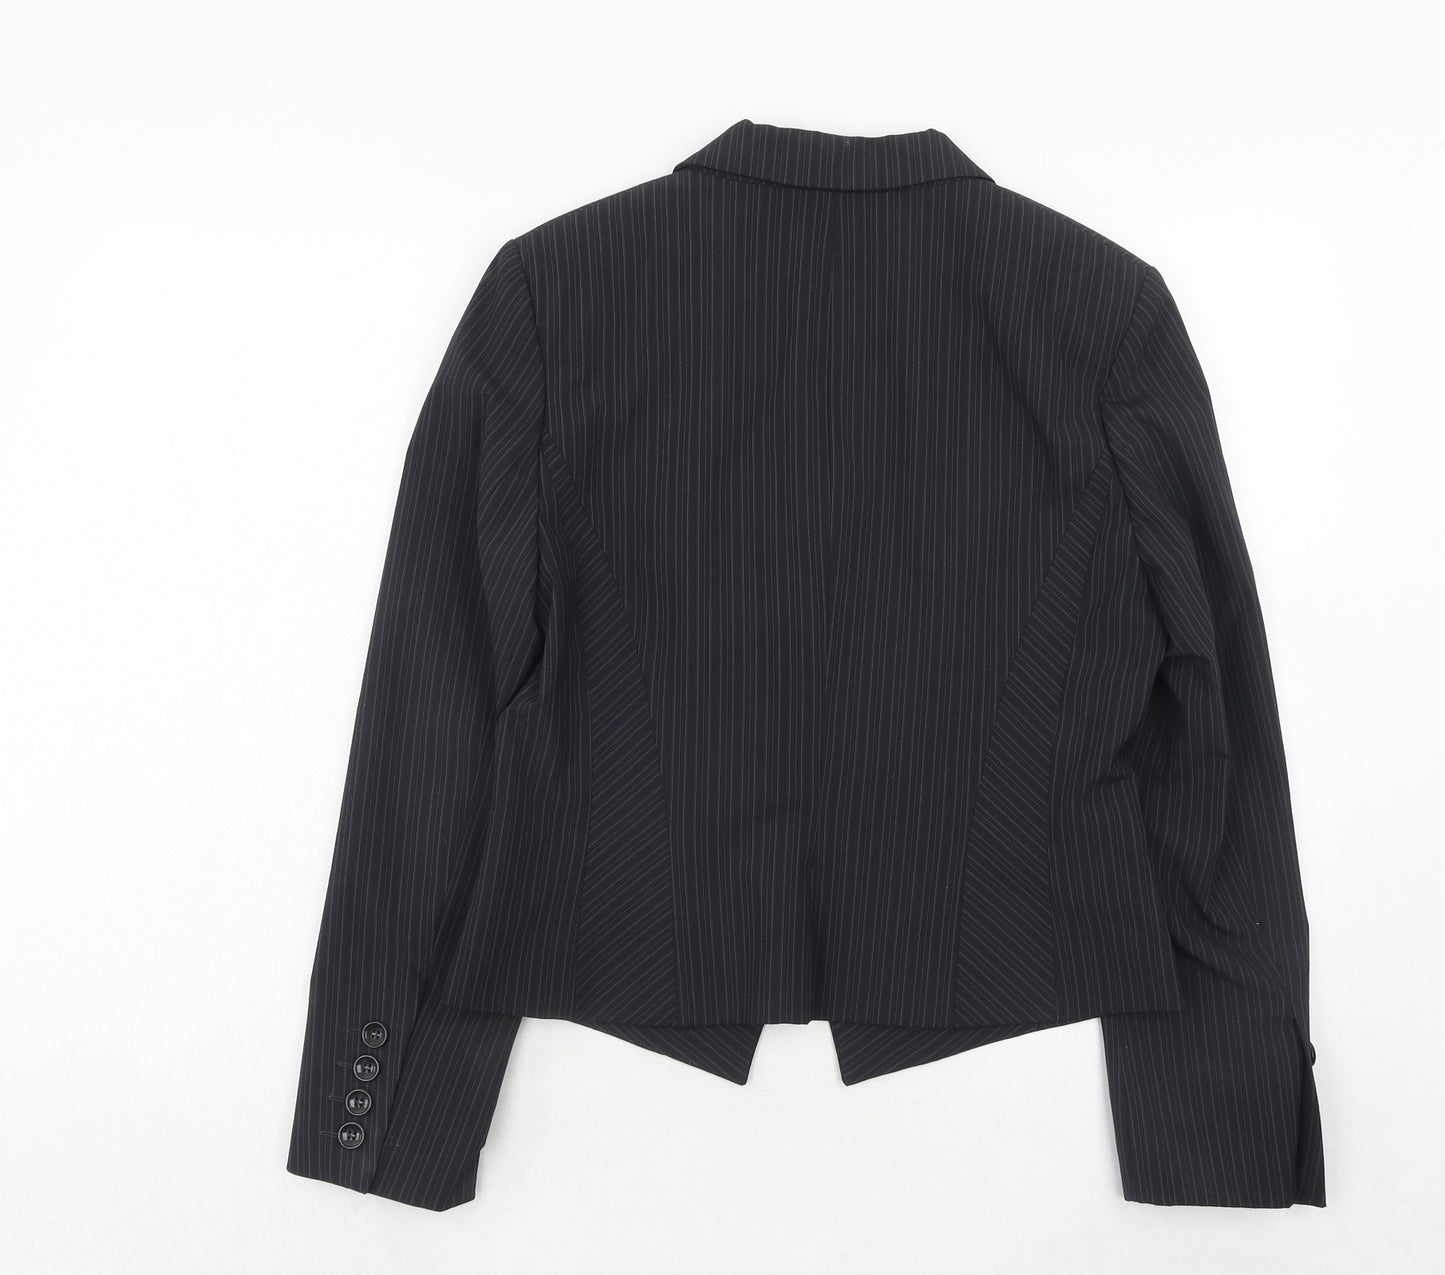 NEXT Womens Black Striped Polyester Jacket Suit Jacket Size 14